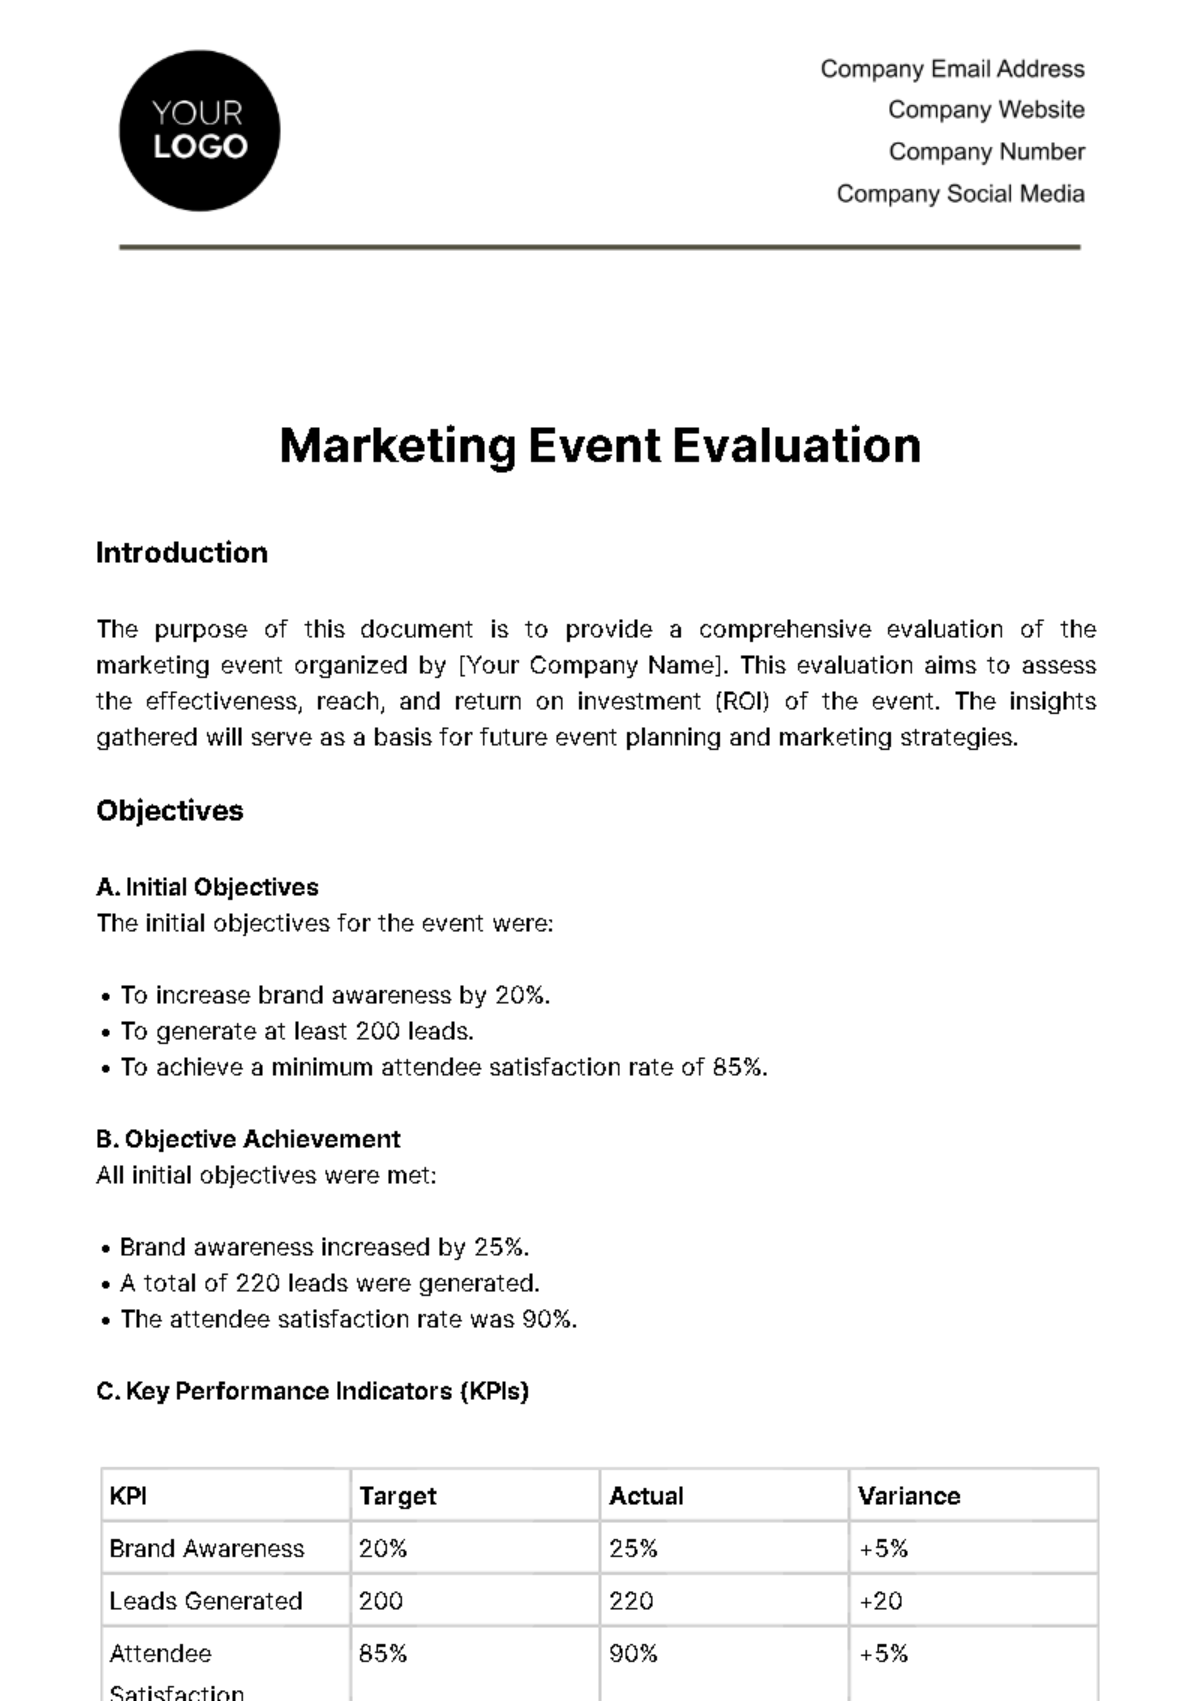 Marketing Event Evaluation Template